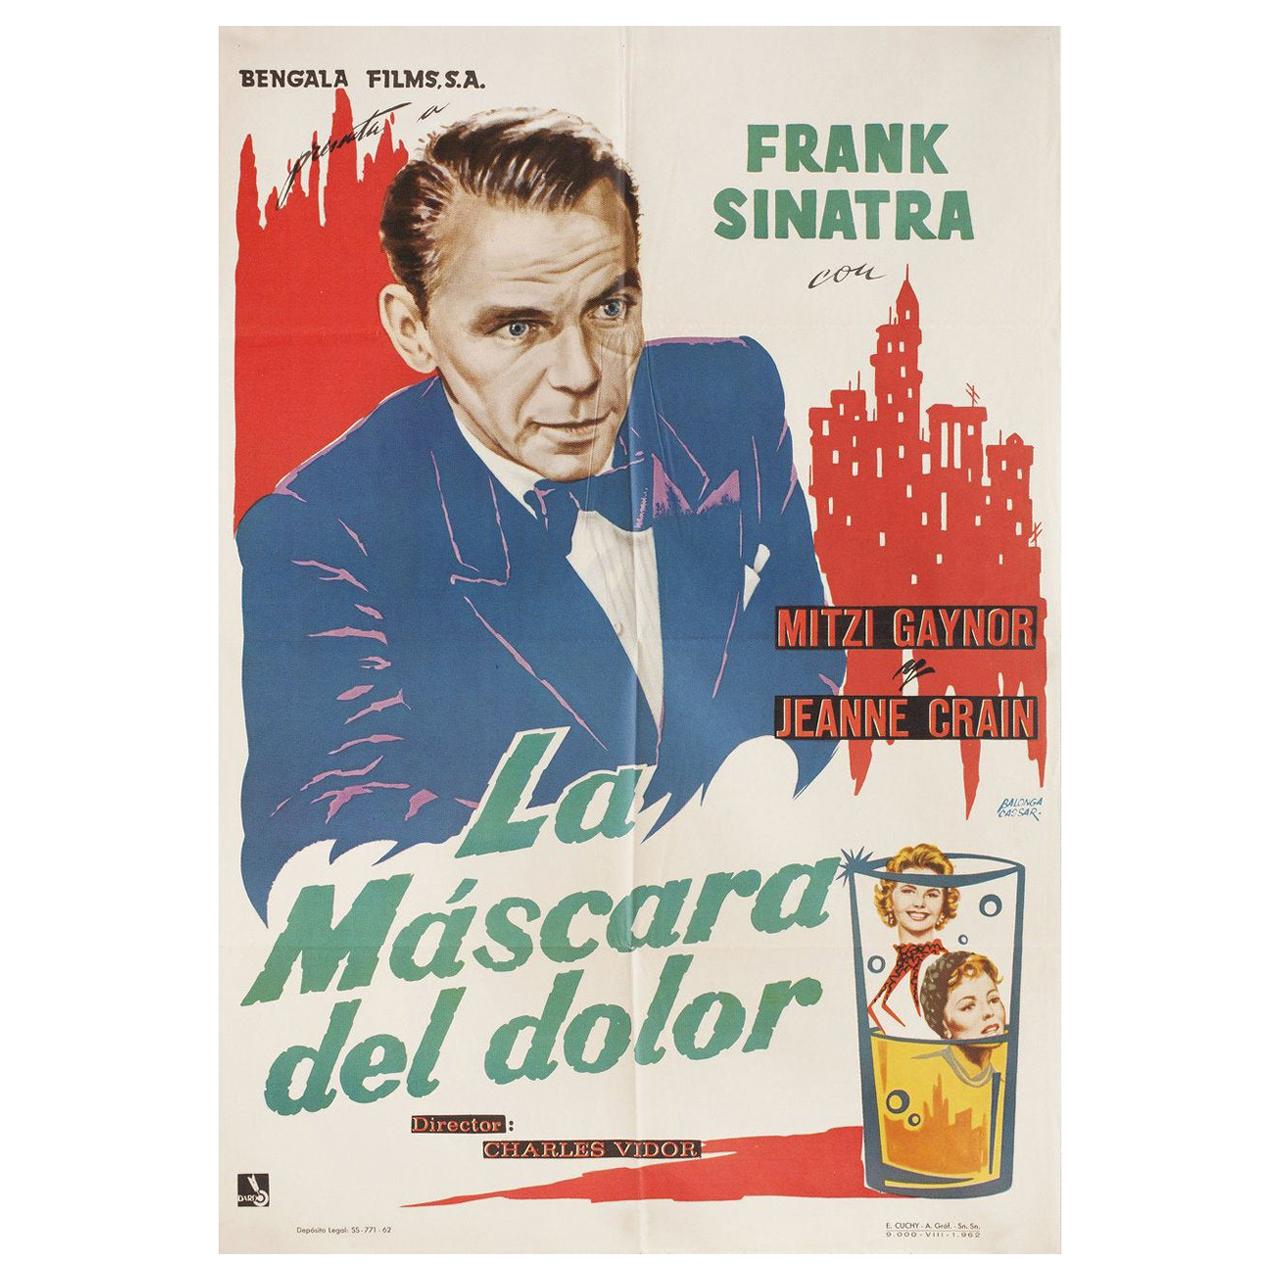 The Joker Is Wild 1962 Spanish One Sheet Film Poster